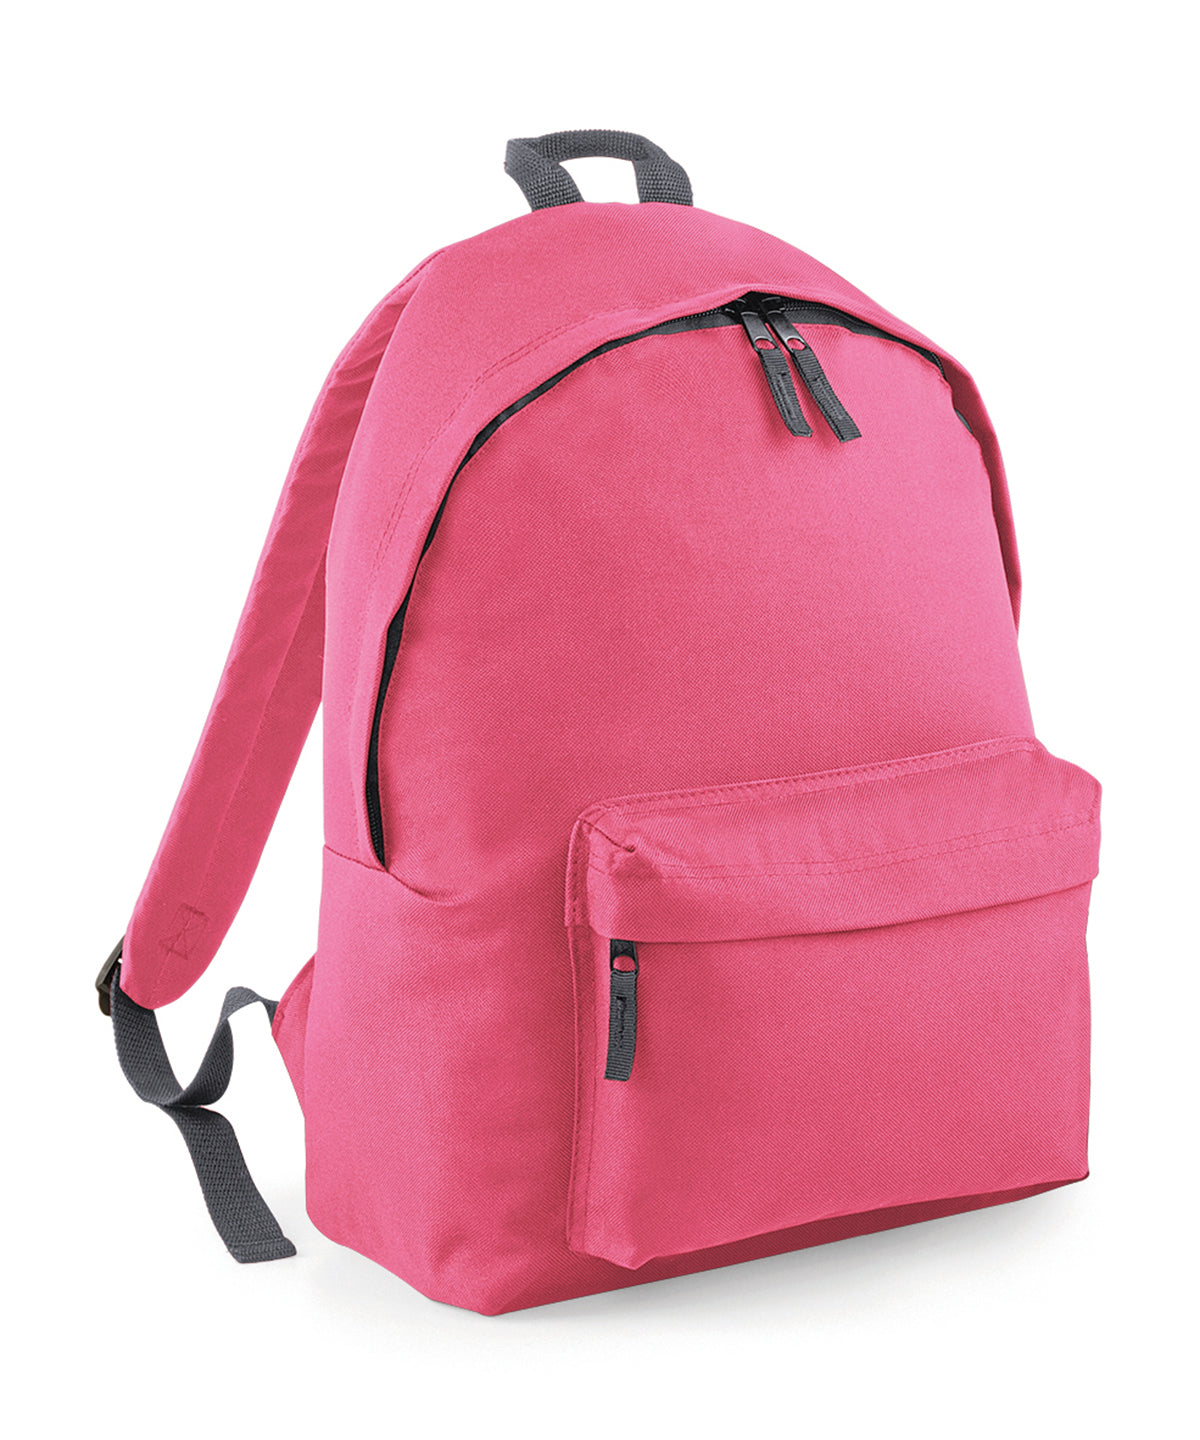 Personalised Bags - Light Pink Bagbase Original fashion backpack